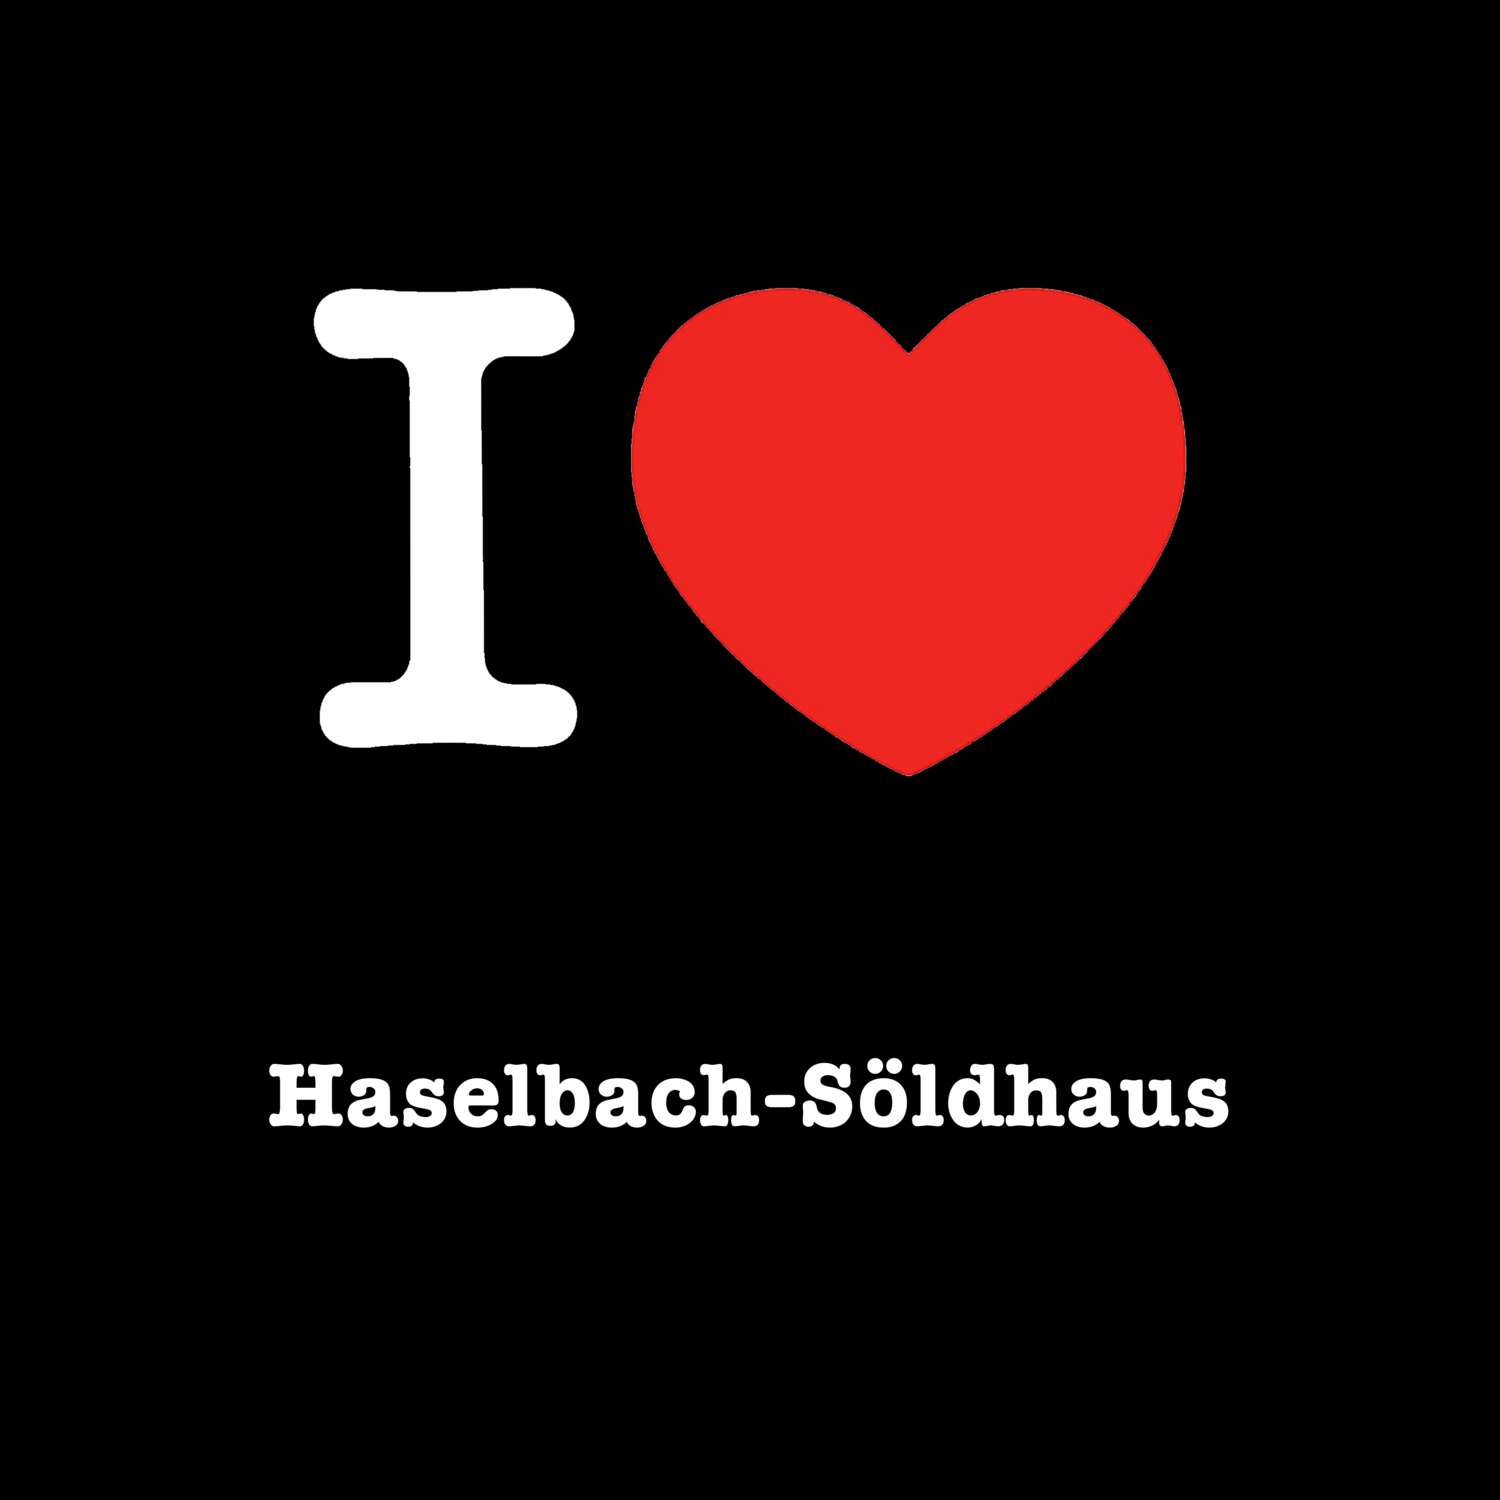 Haselbach-Söldhaus T-Shirt »I love«